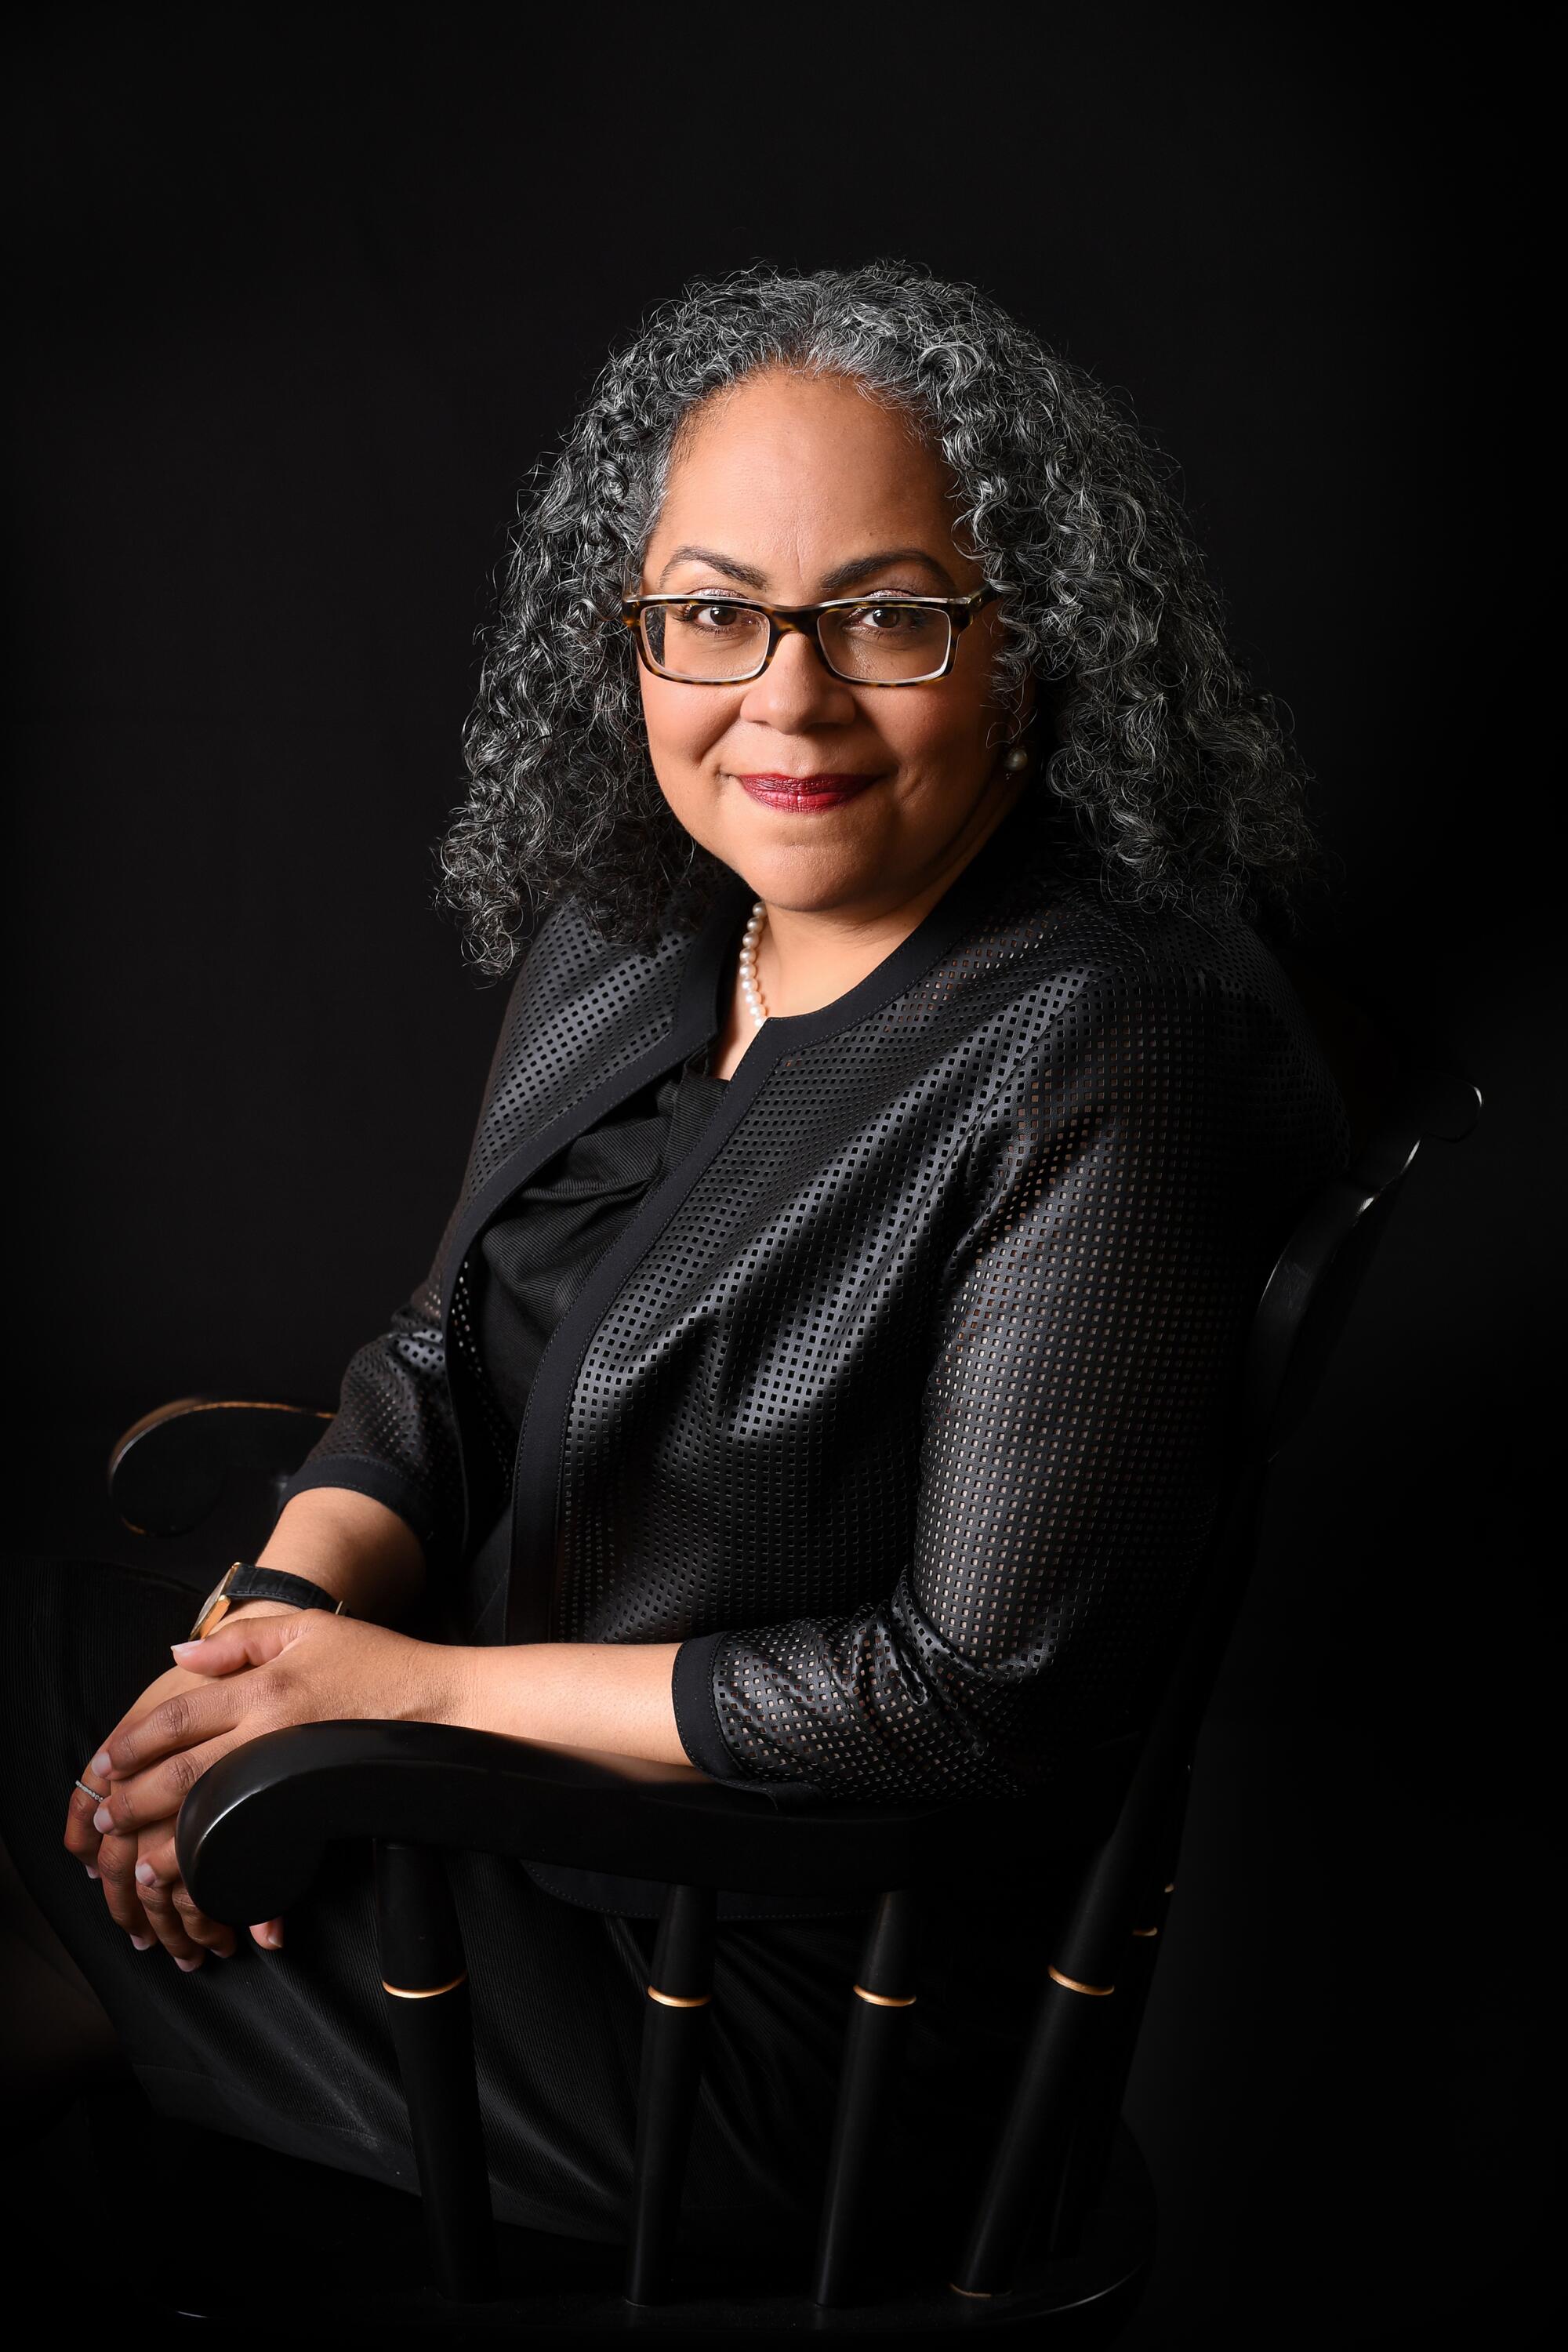 A portrait of Fordham University law professor Tanya Kateri Hernandez